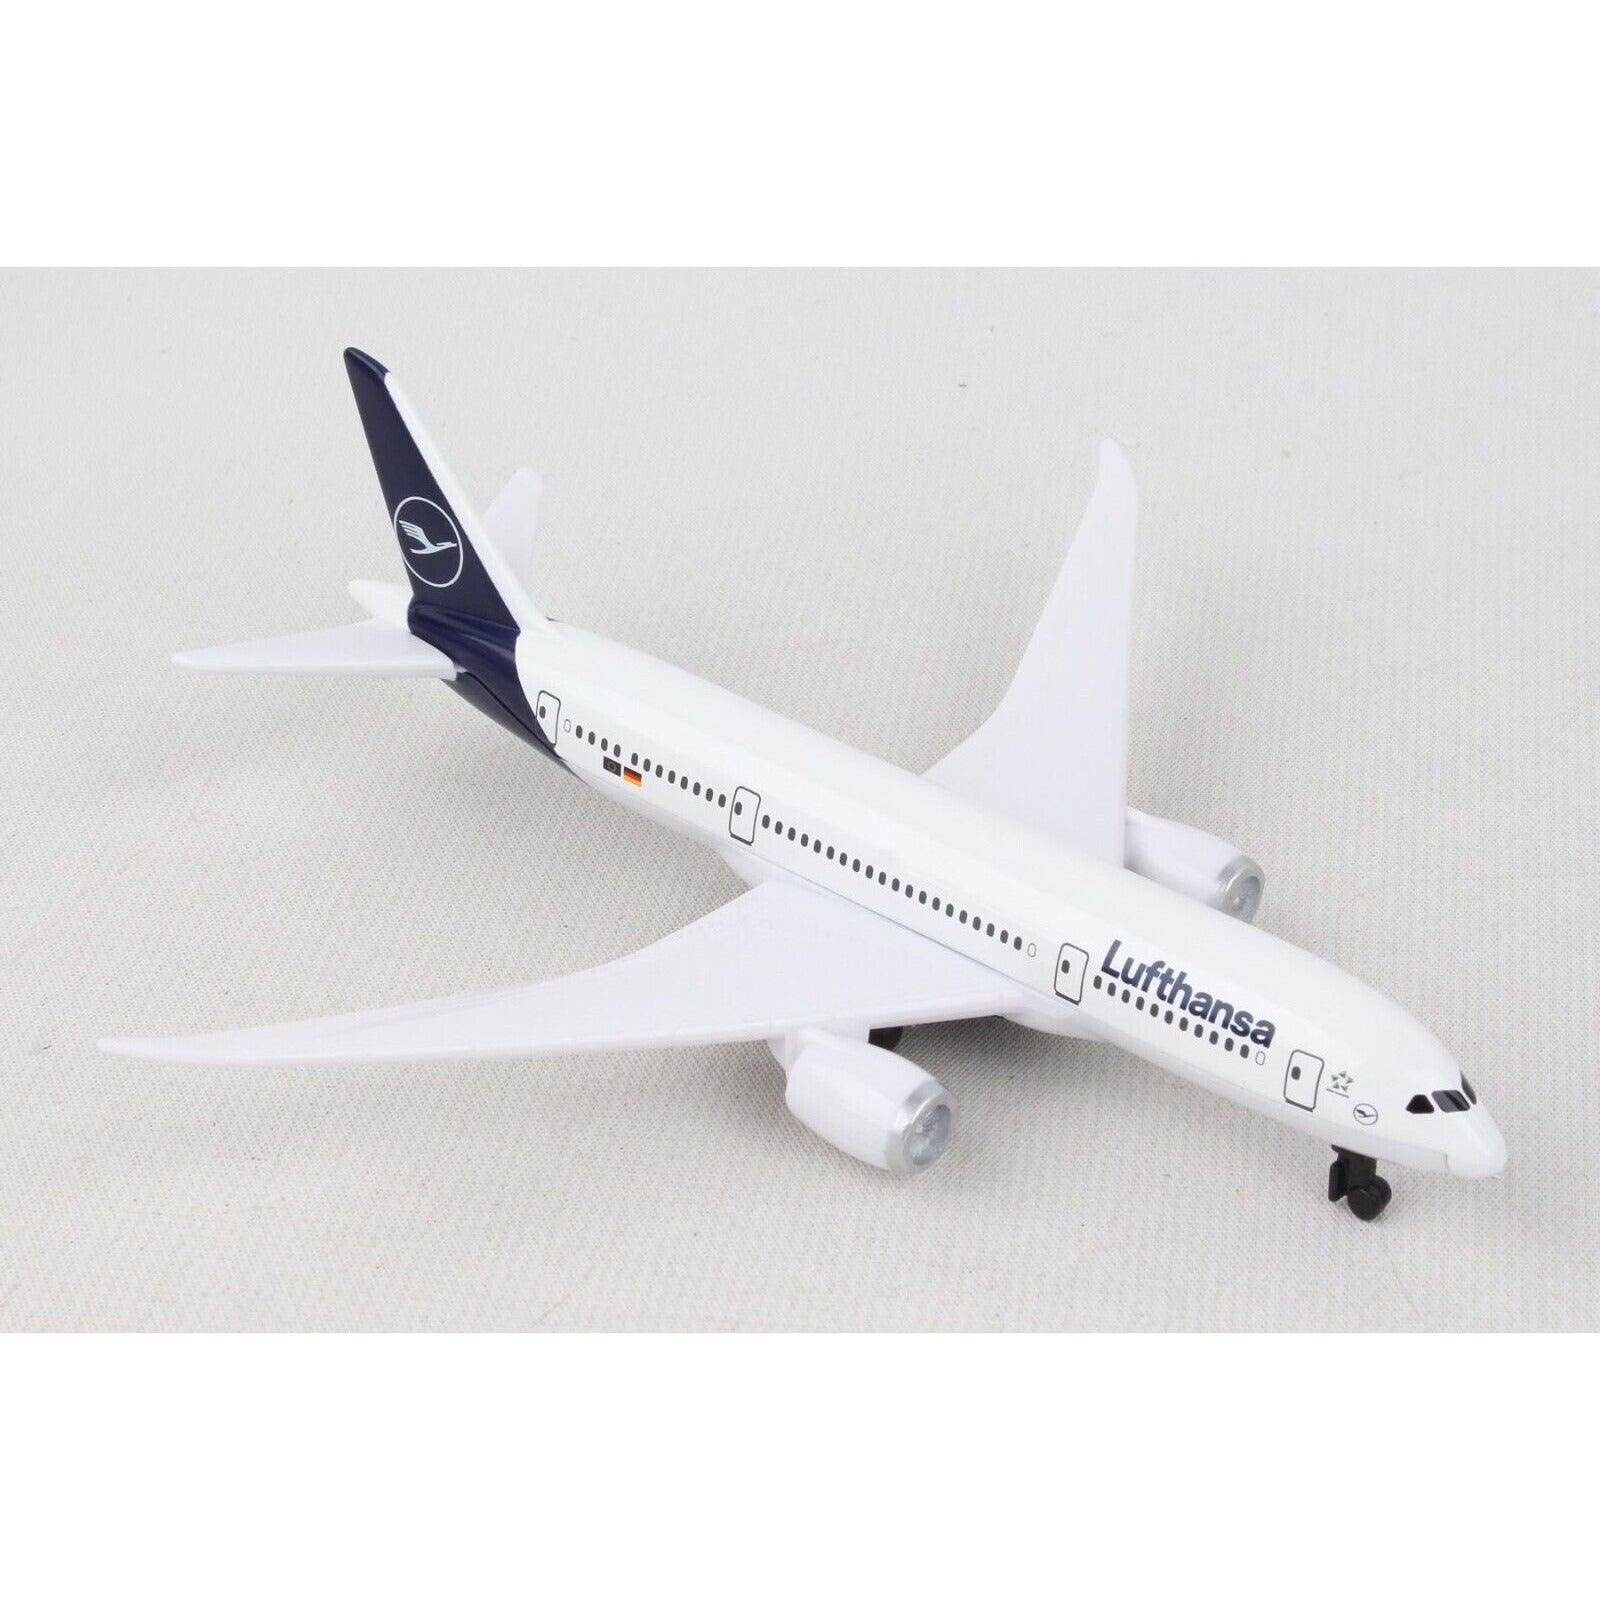 Daron Planes Lufthansa 787 Single Plane RT4136 - BumbleToys - 6+ Years, Boys, EXO, Flying, Girls, Pre-Order